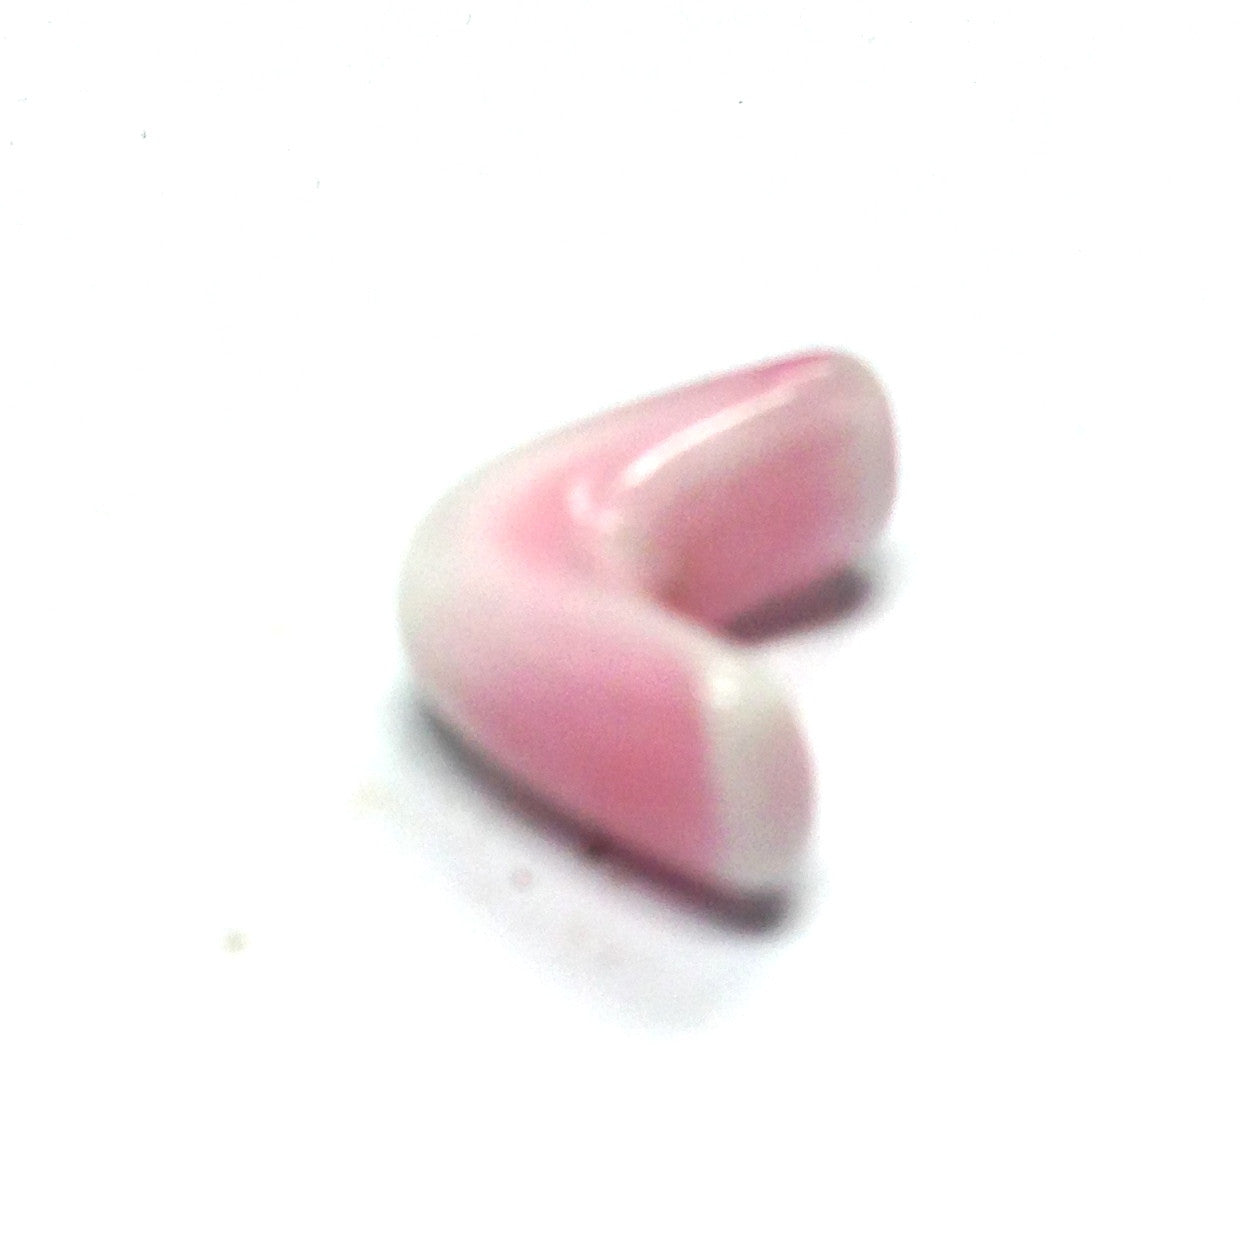 11MM Pink/White Glass Interlock Bead (72 pieces)